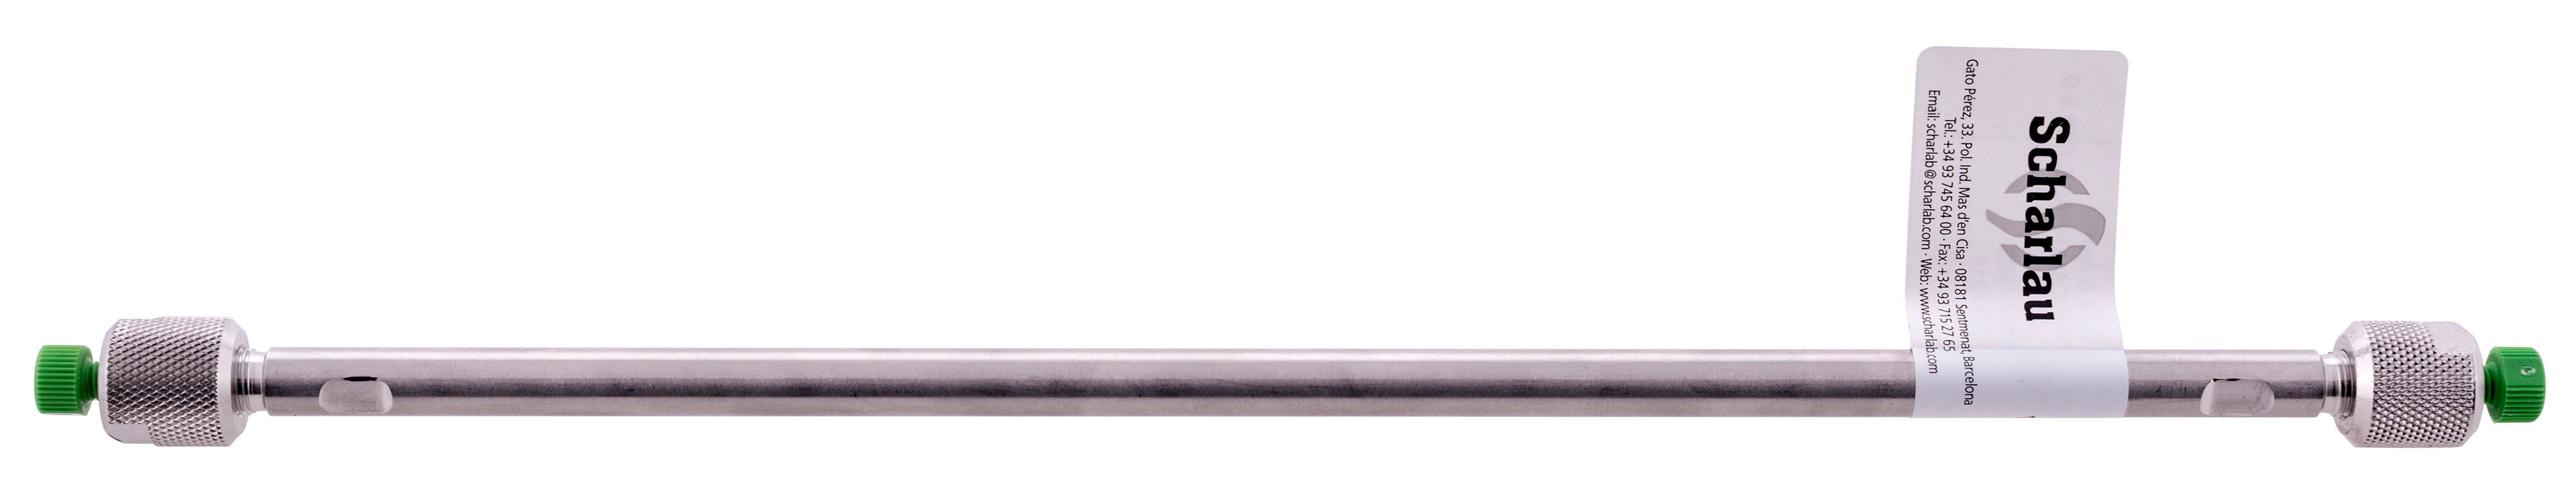 Columna KromaPhase 4,6mm D.I. SCHARLAU. Fase: SIL. Tamaño de particula (µm): 3,5. Tamaño de poro (Å): 100. Longitud (mm): 50. Diámetro interno (mm): 4,6